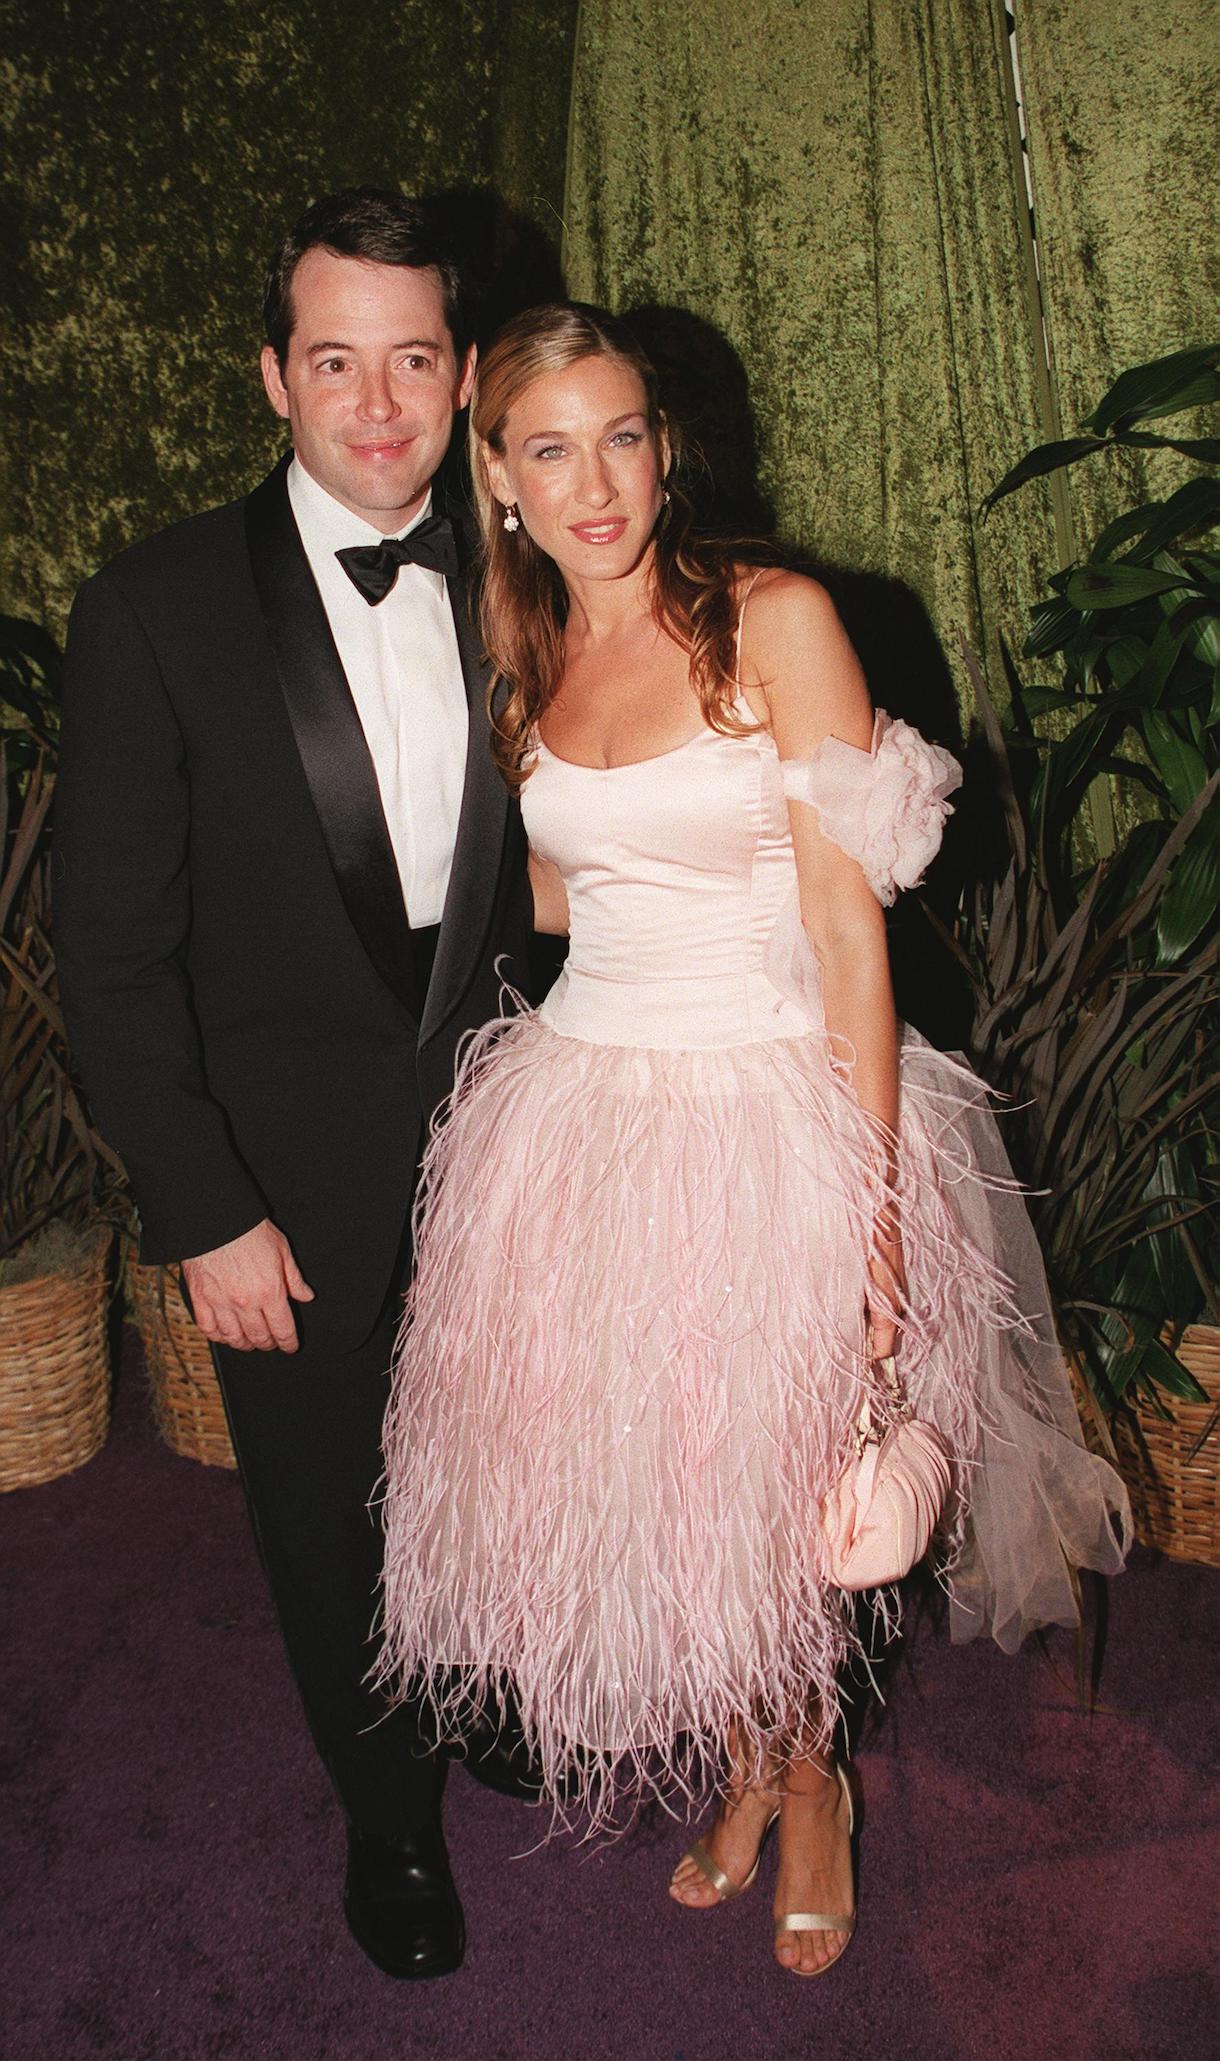 Sarah Jessica Parker and husband Matthew Broderick